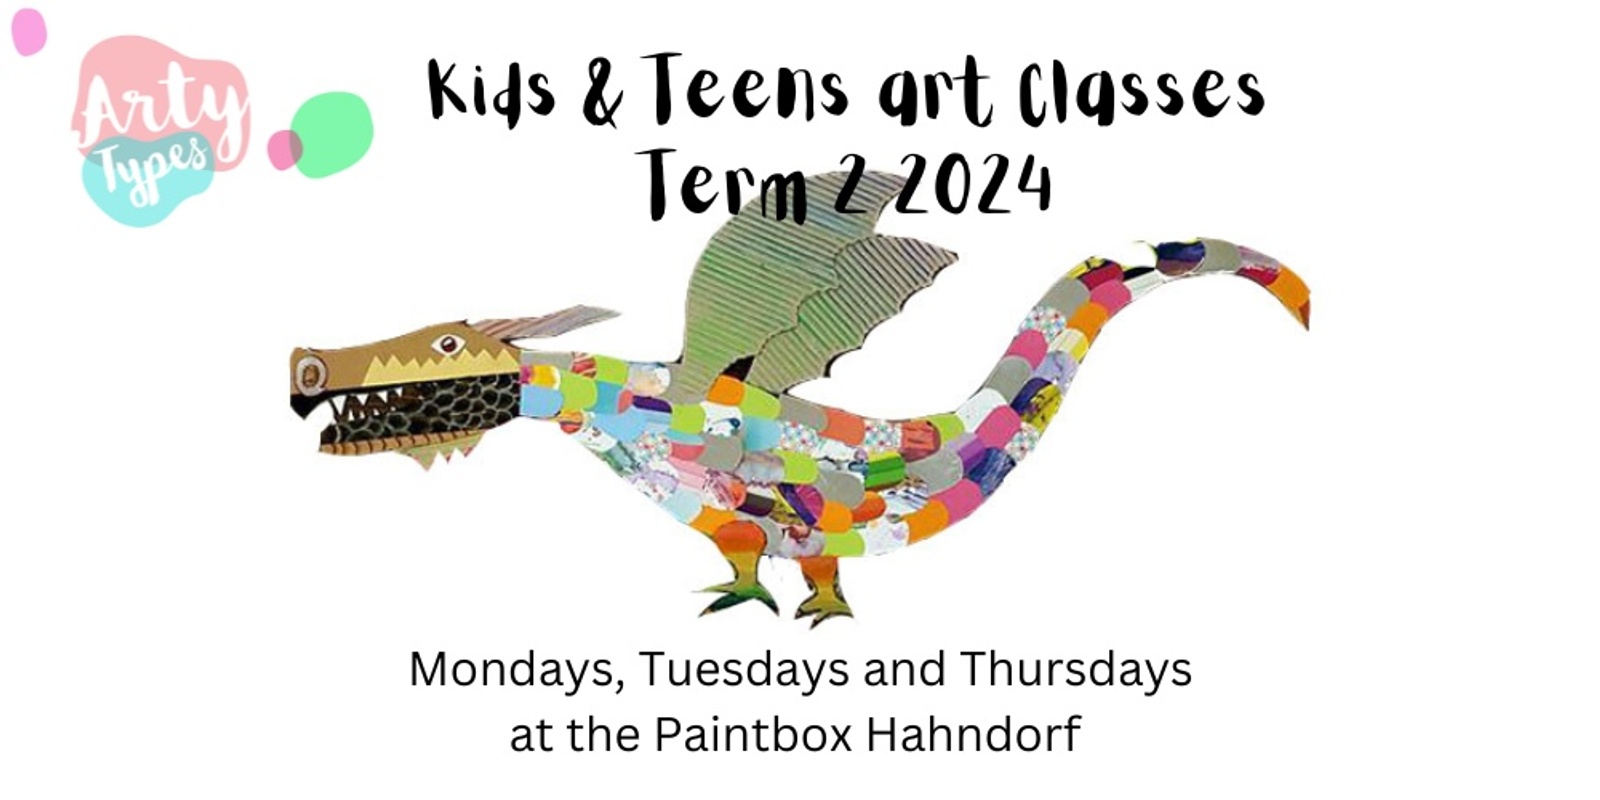 Banner image for Arty Types kids art classes Term 2 2024